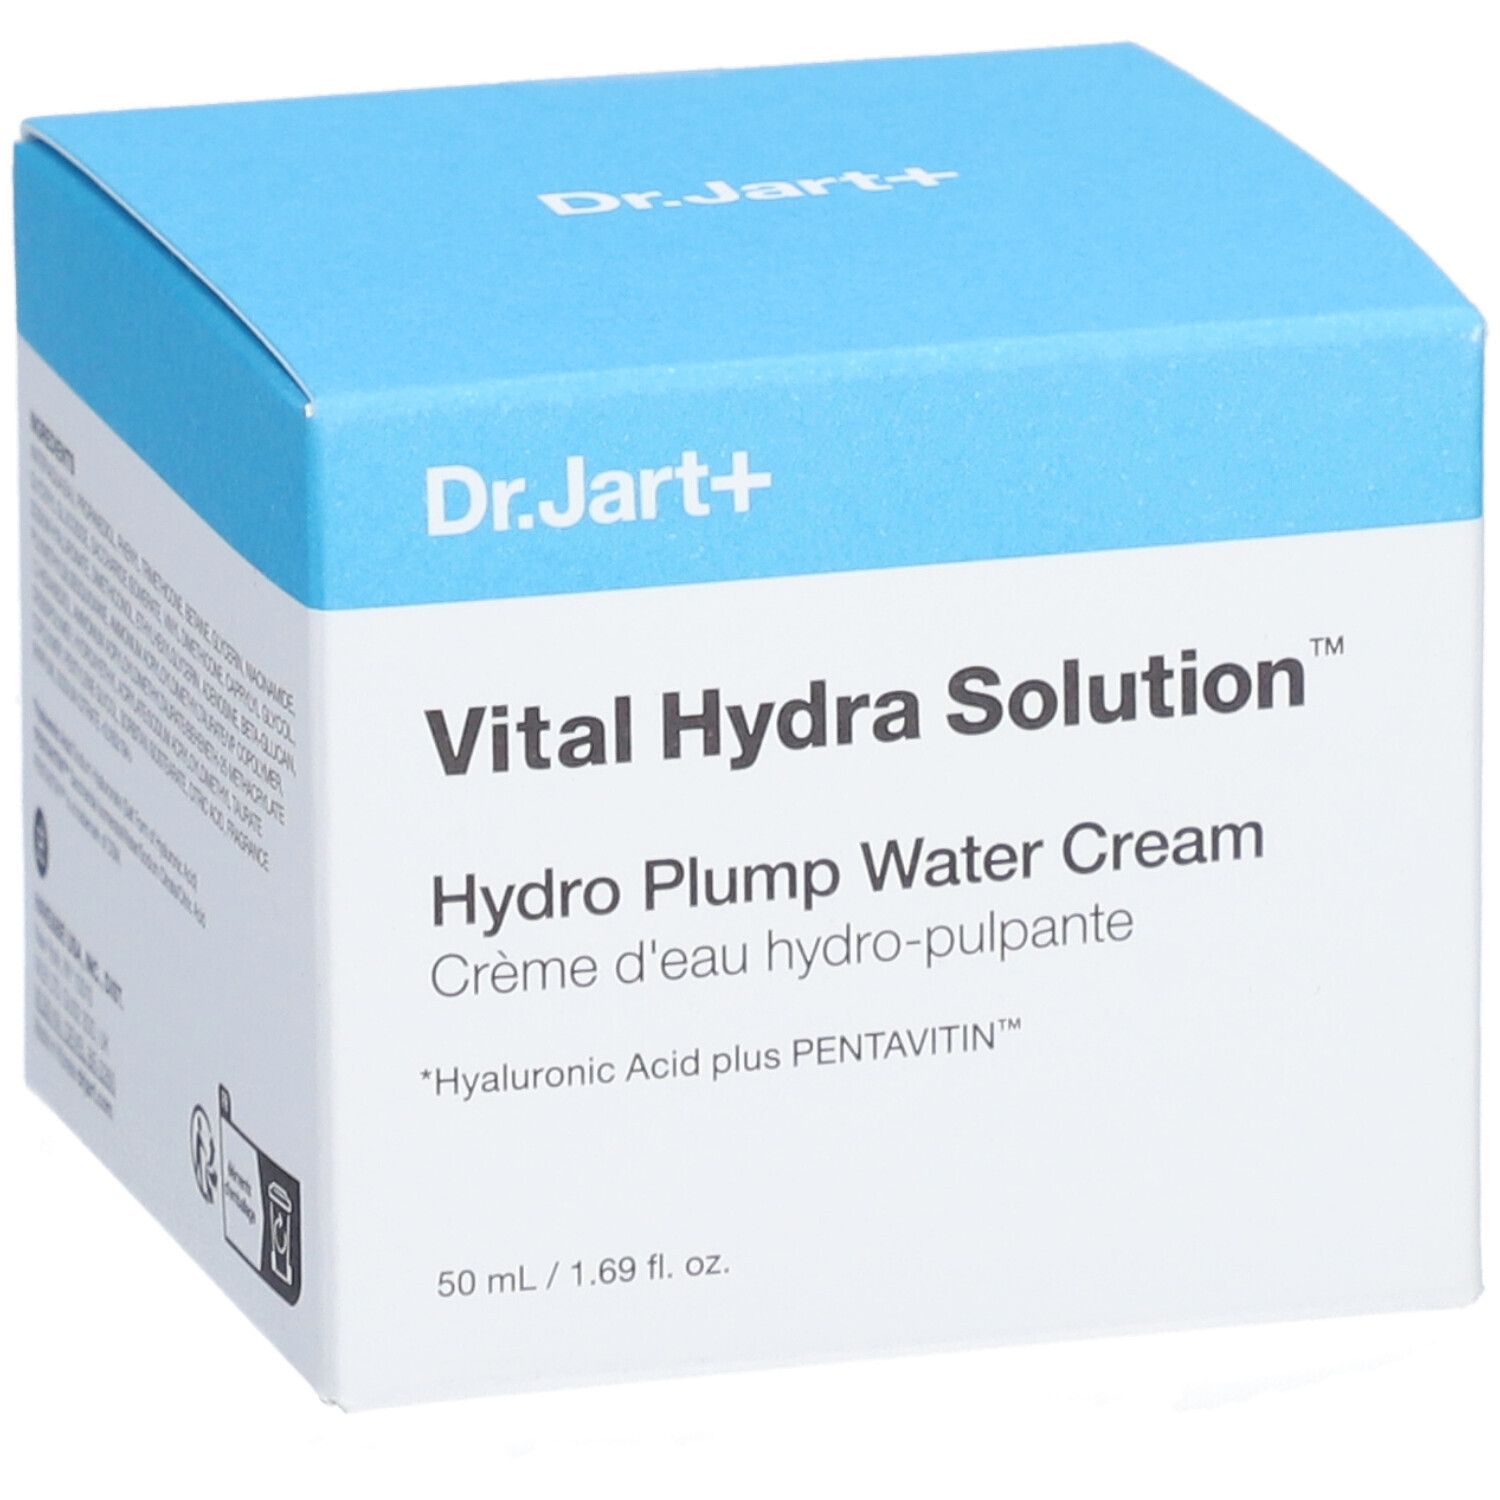 Dr.Jart+ VITAL HYDRO SOLUTION™ Hydro Plump Water Cream + Hyaluronic Acid